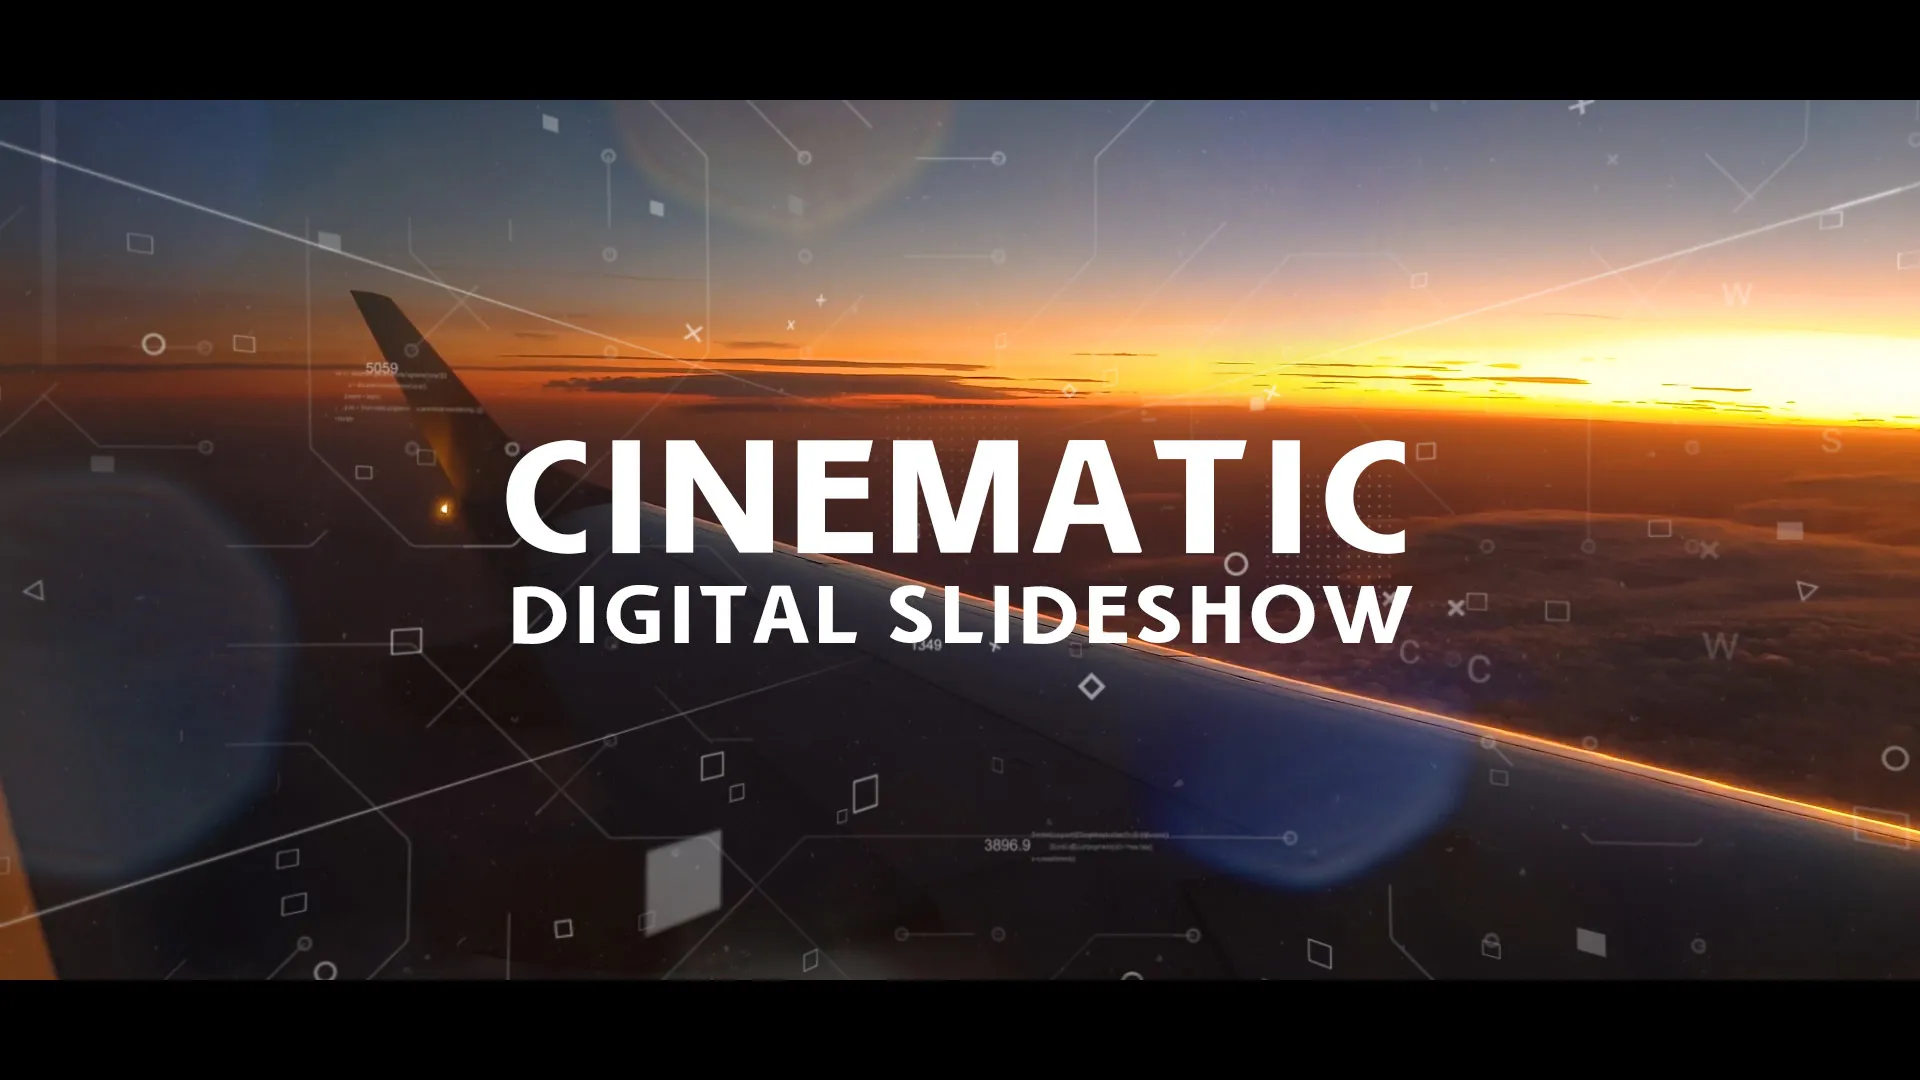 Cinematic Digital Slideshow
                      